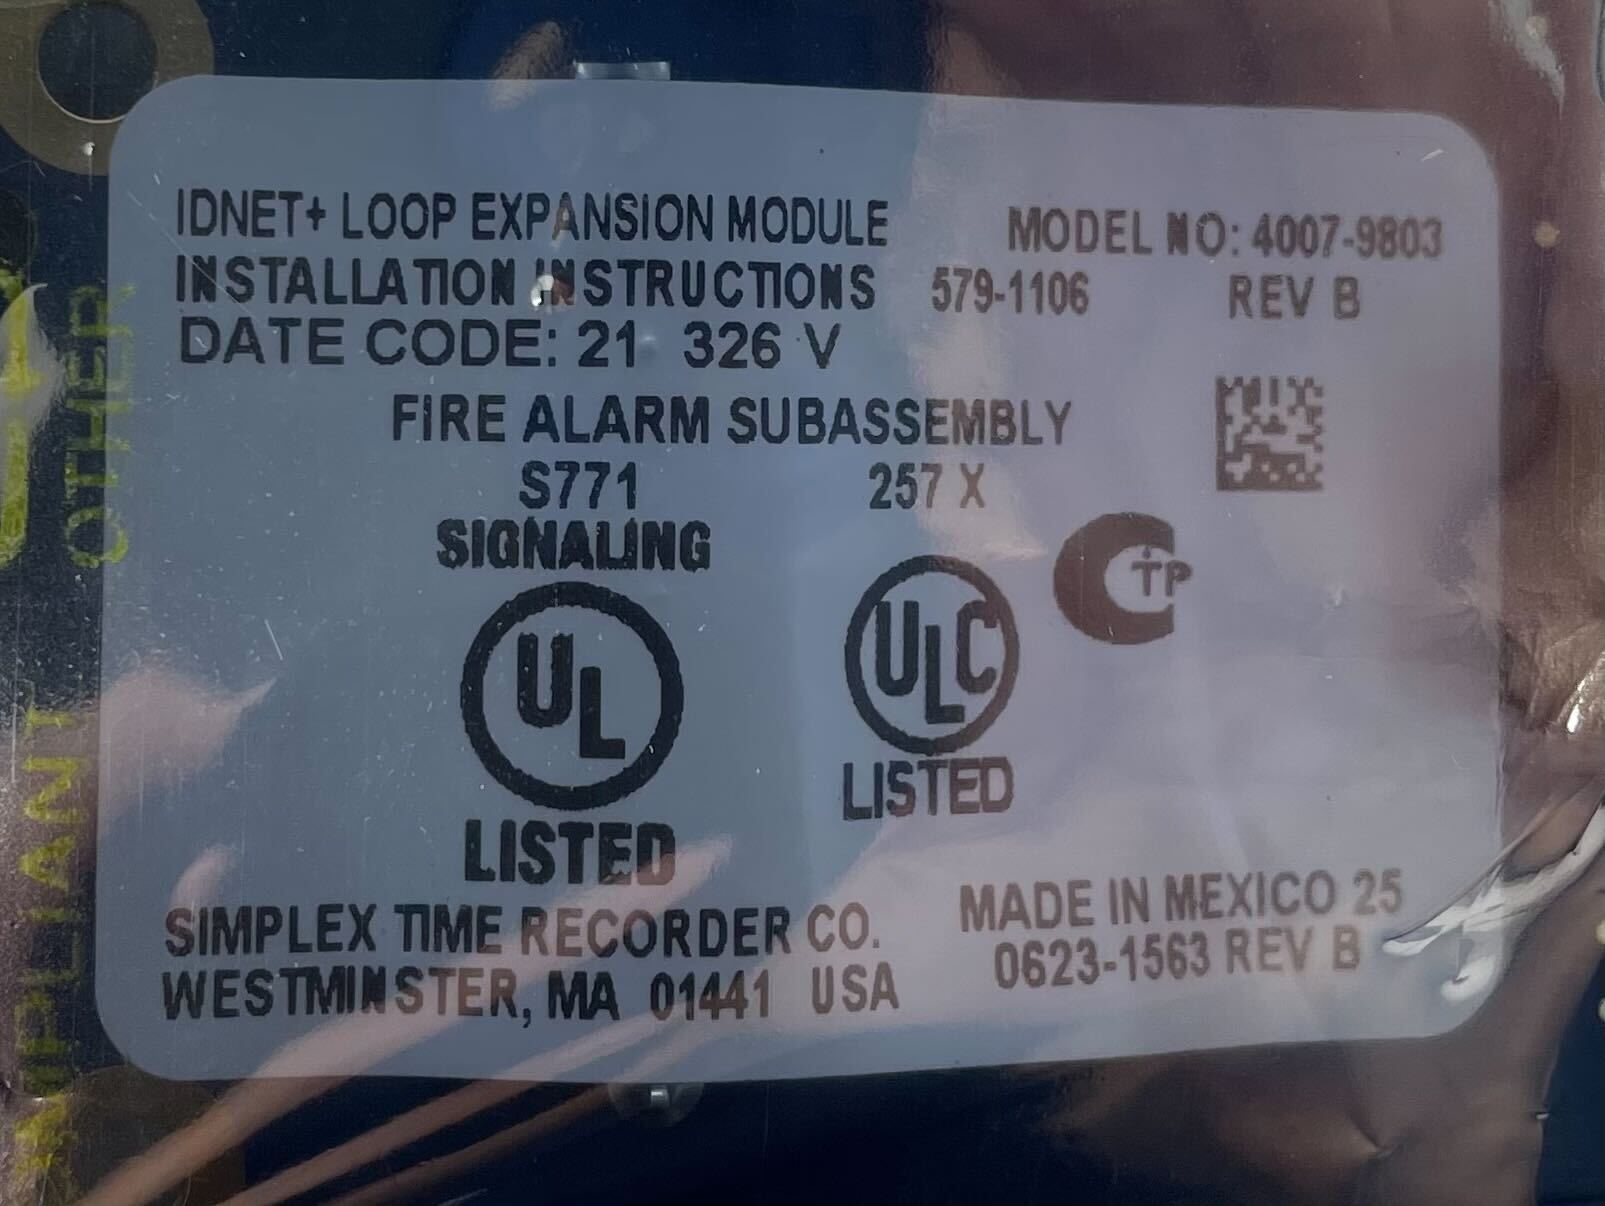 Simplex 4007-9803 IDNET Loop Expansion Module - The Fire Alarm Supplier